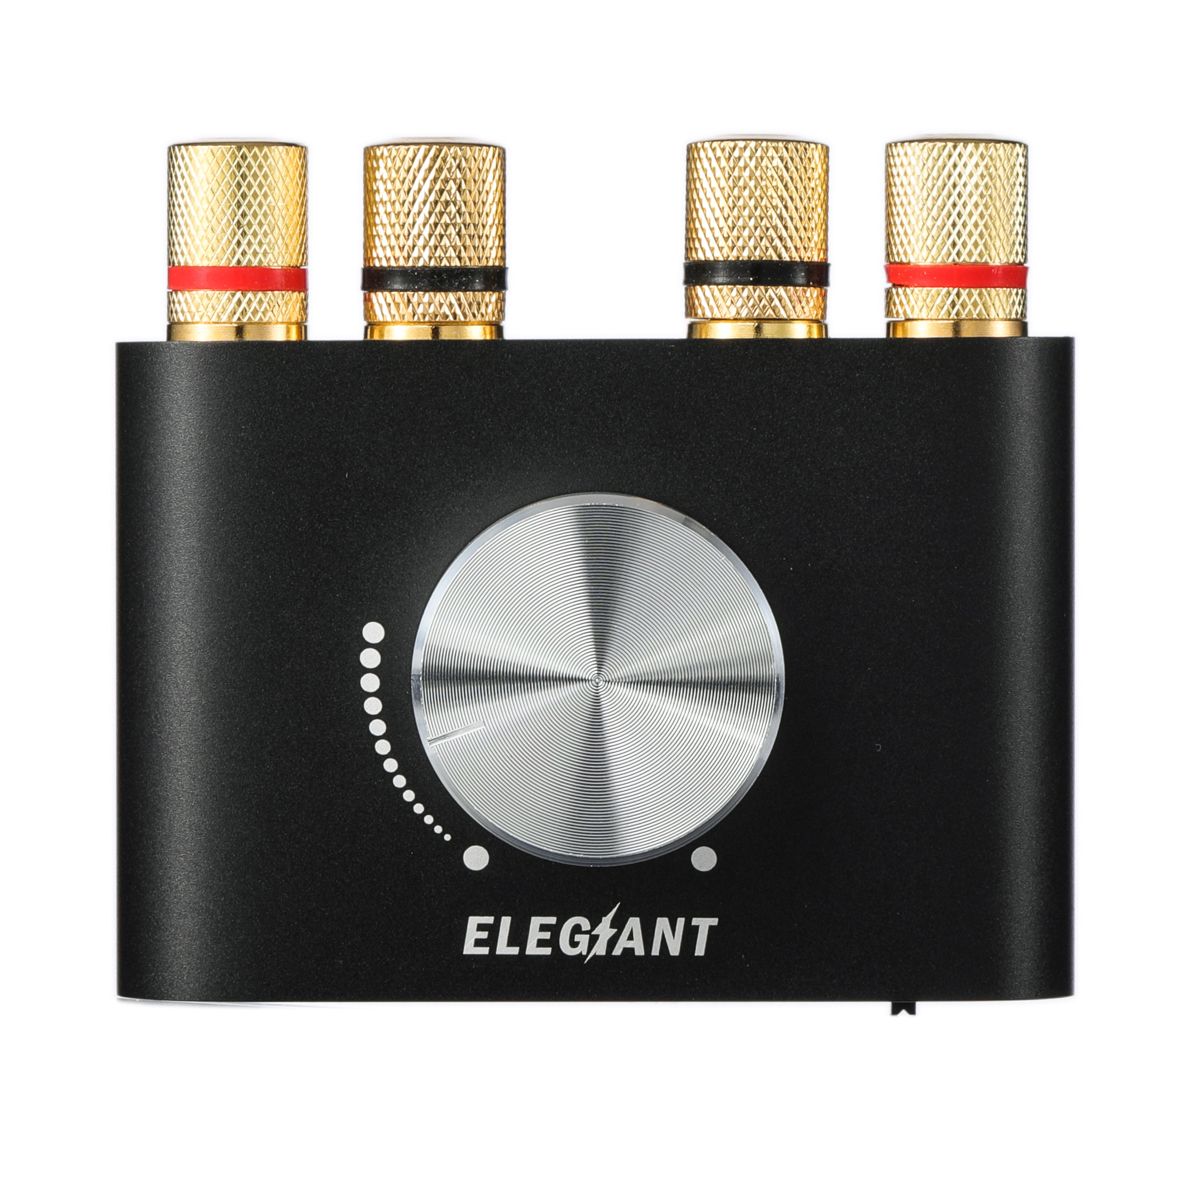 Mini-bluetooth-Digital-Power-Amplifier-Audio-Stereo-High-Bass-Speaker-100W-DC9V-24V-US-Plug-1461967